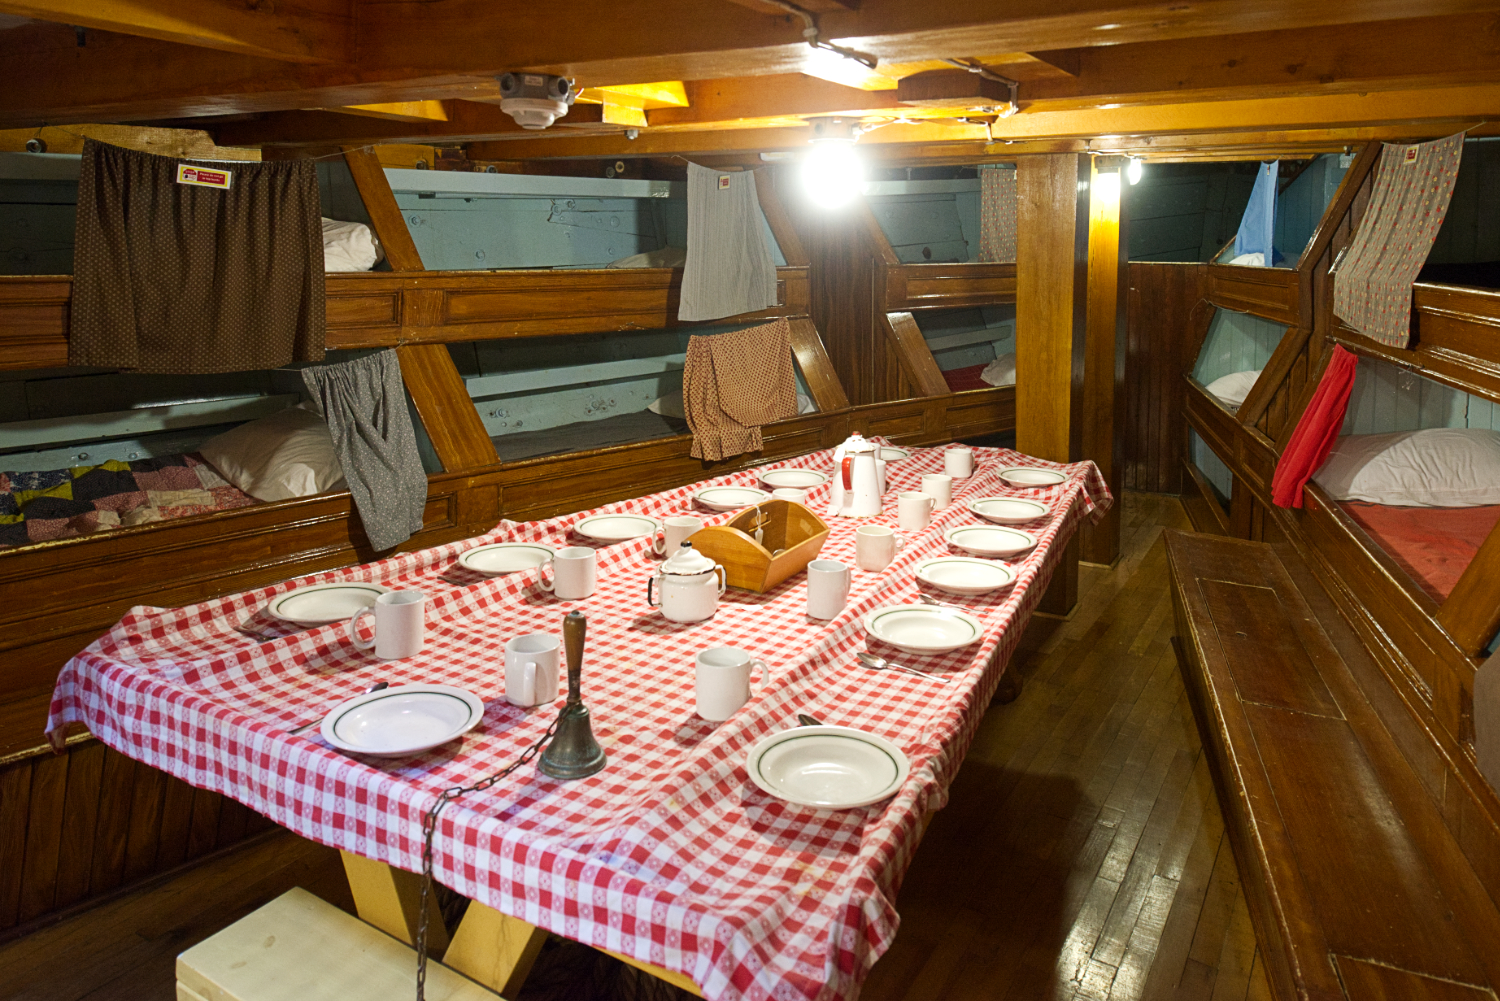 Eating and sleeping quarters inside a fishing schooner.